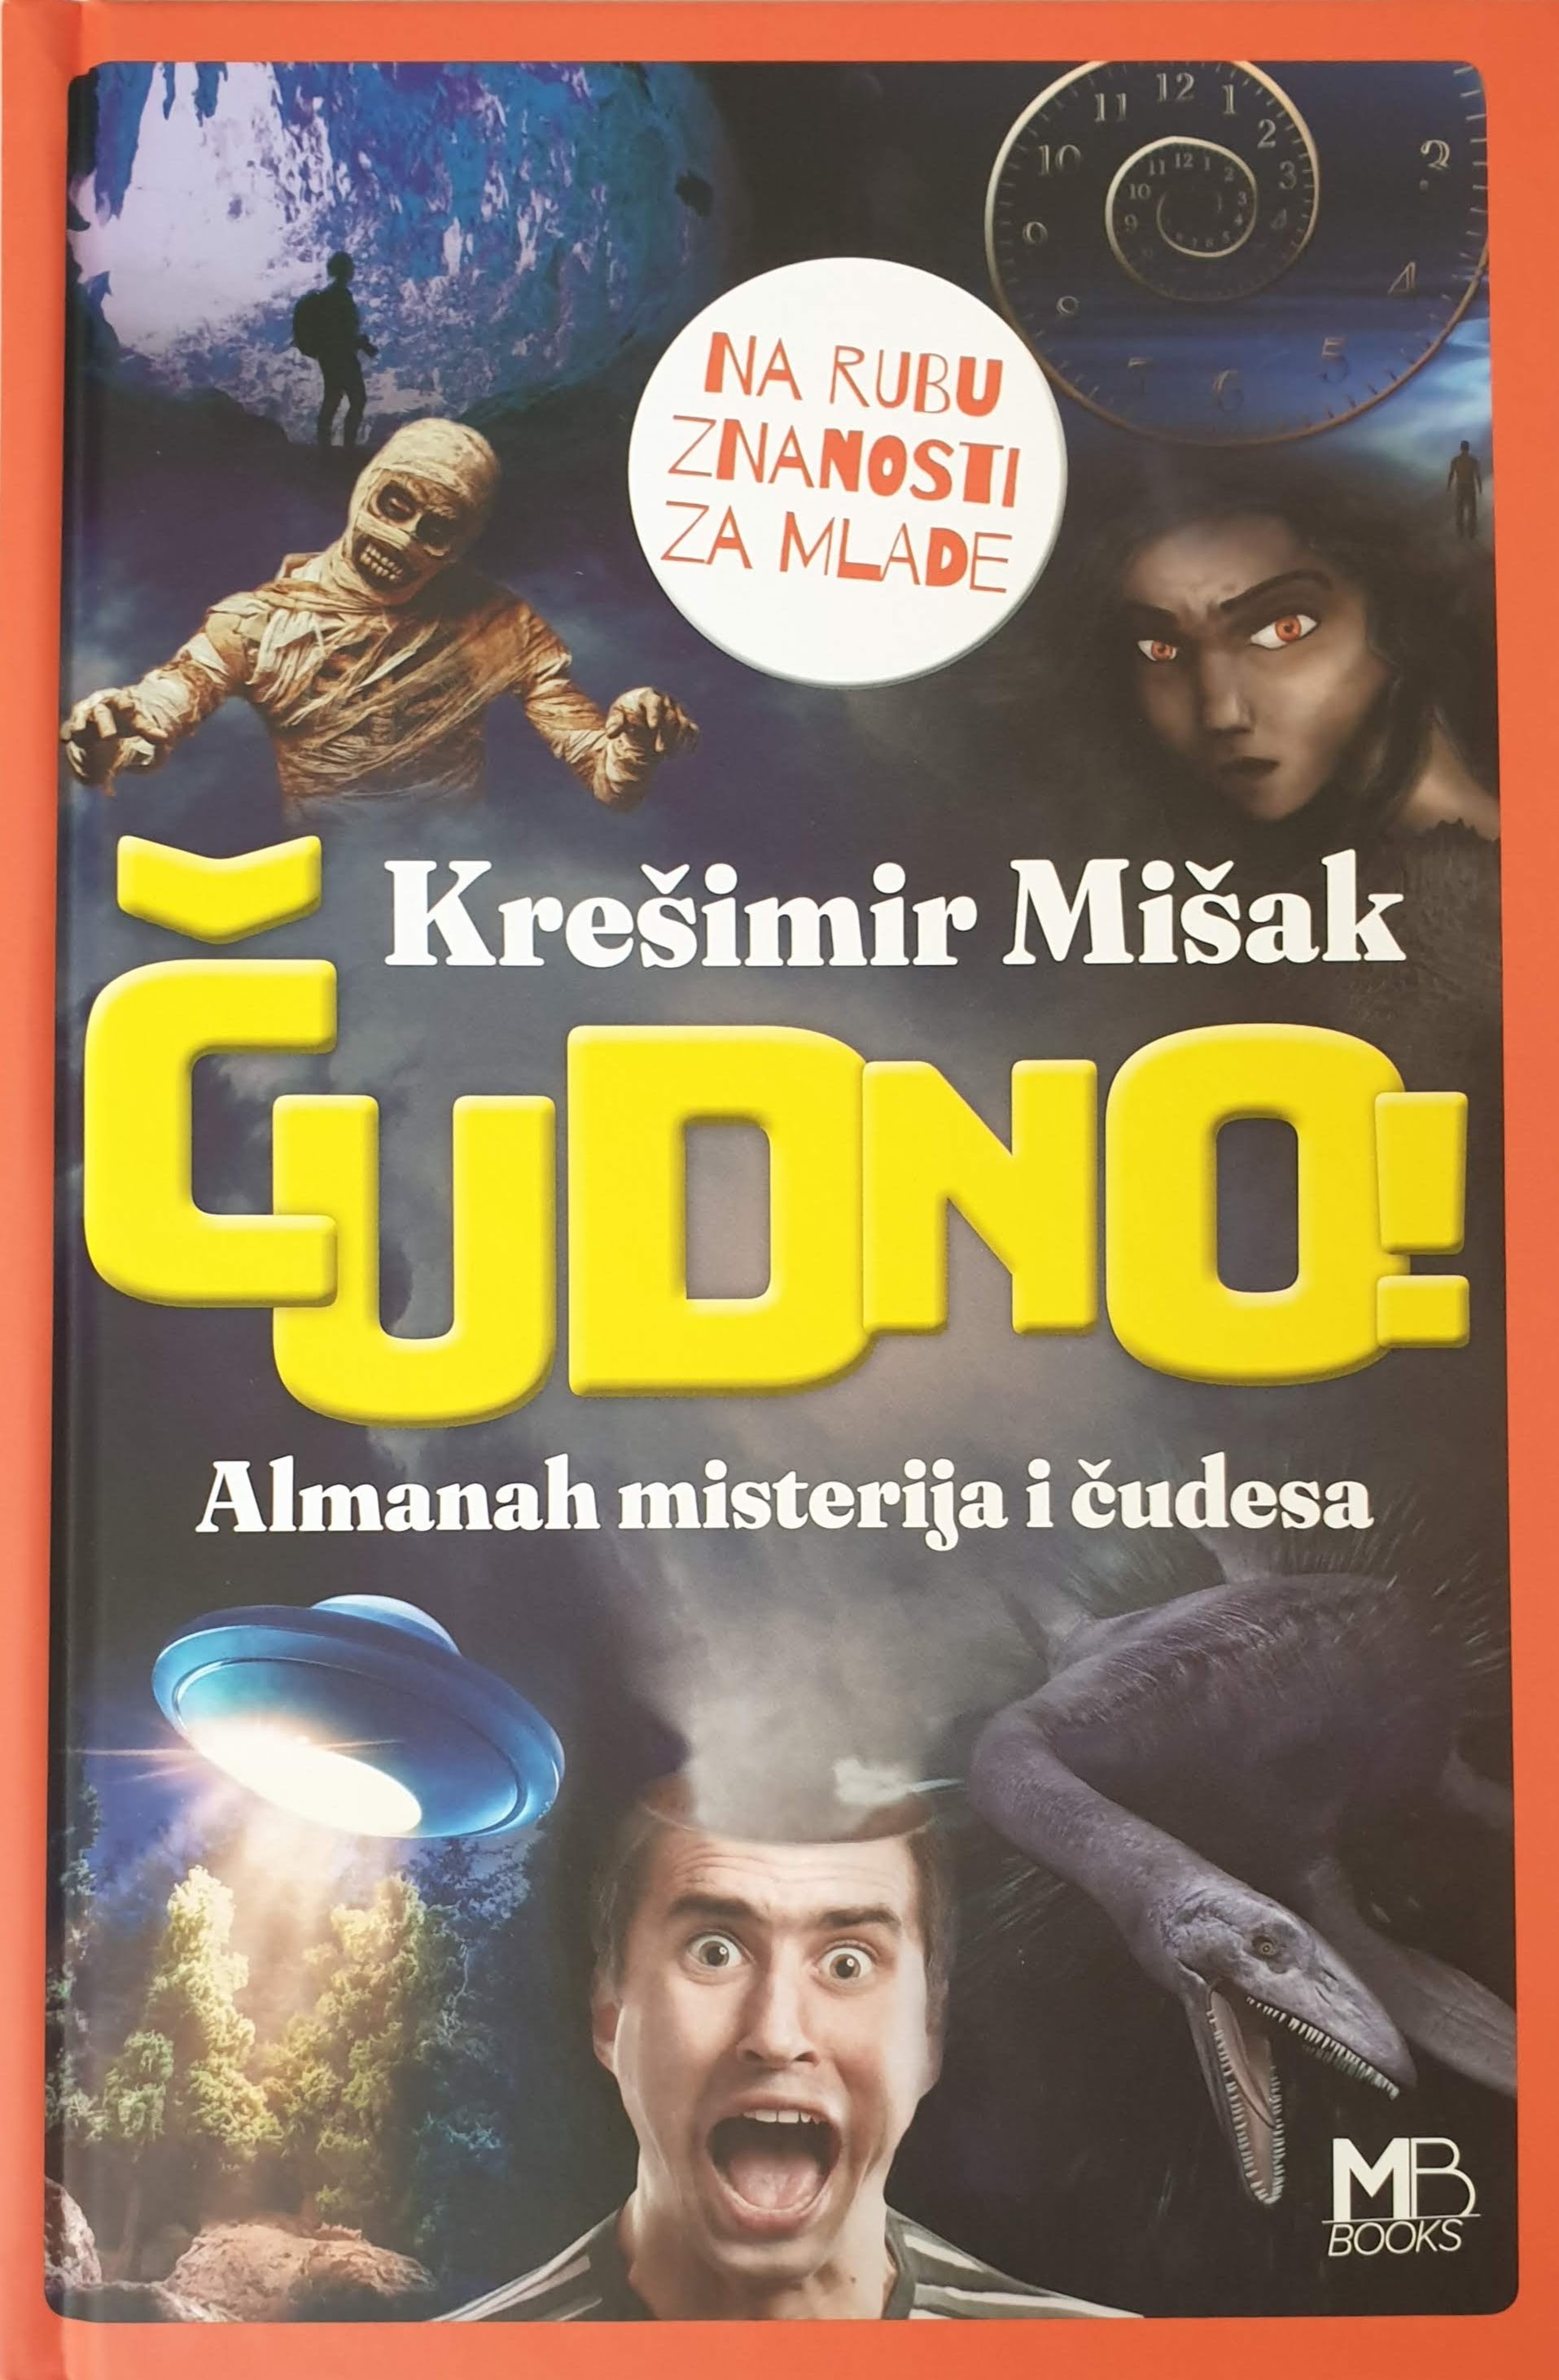 Krešimir Mišak: Čudno! Almanah misterija i čudesa